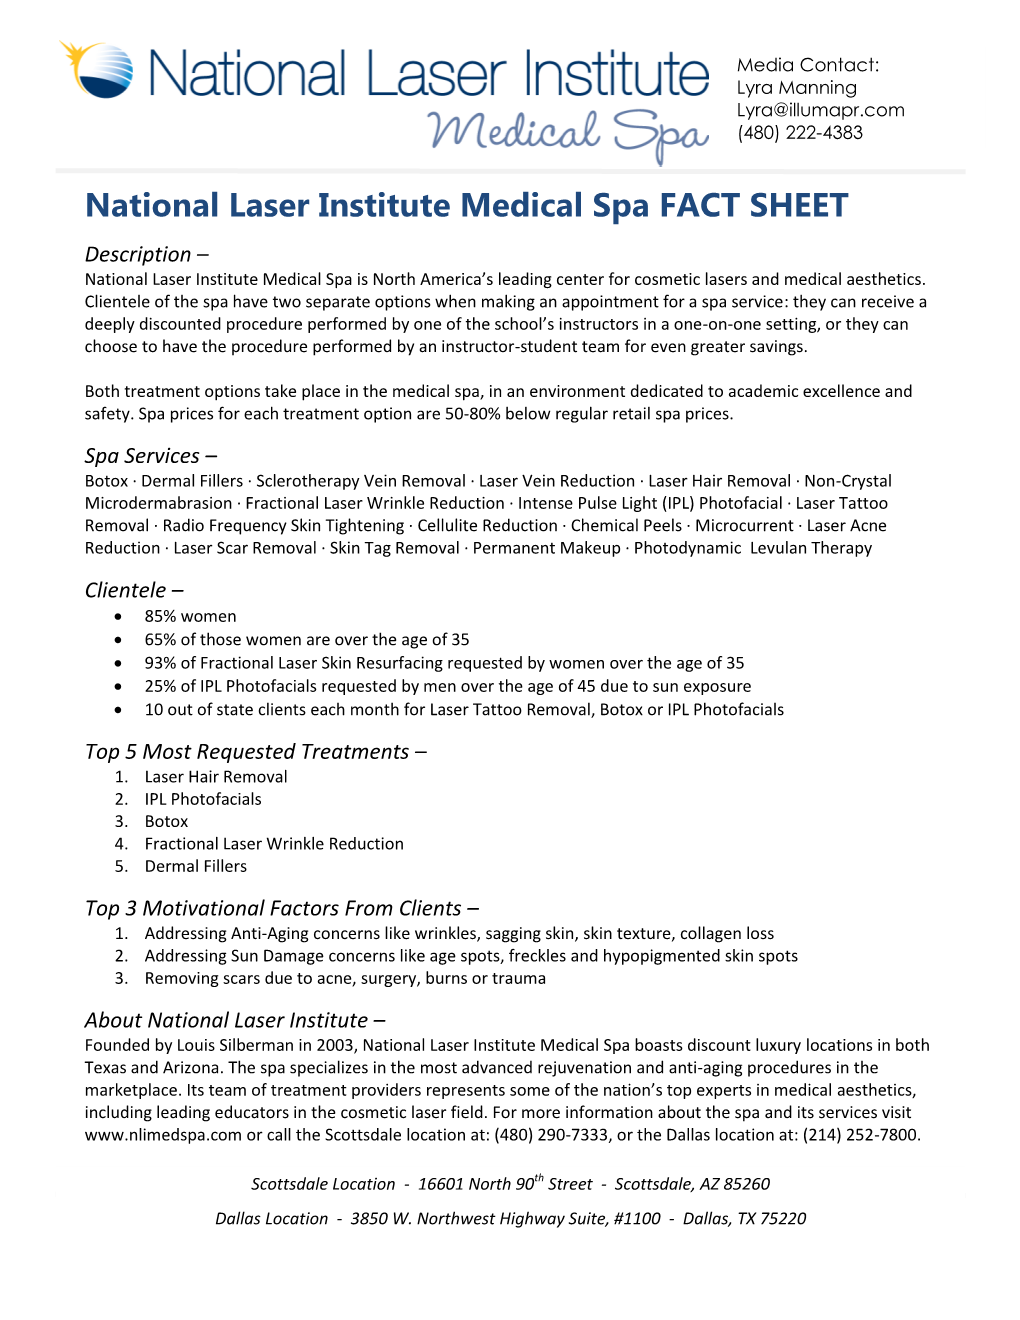 National Laser Institute Medical Spa FACT SHEET